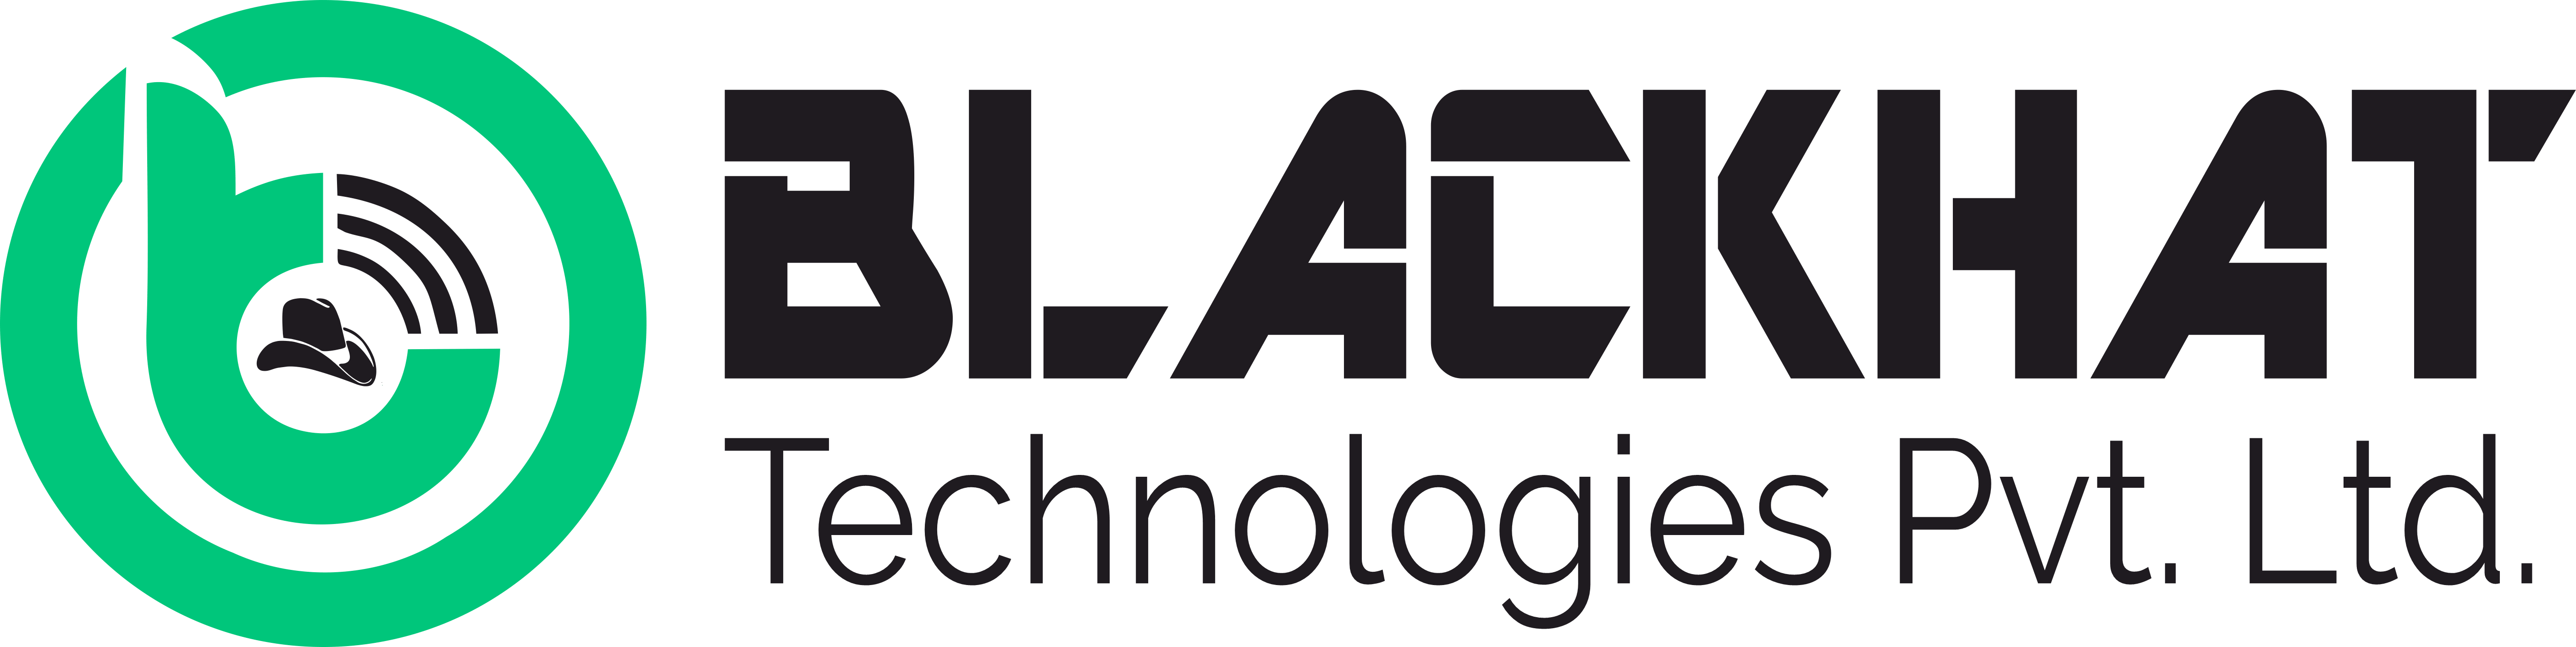 blackhat technologies pvt. ltd. logo